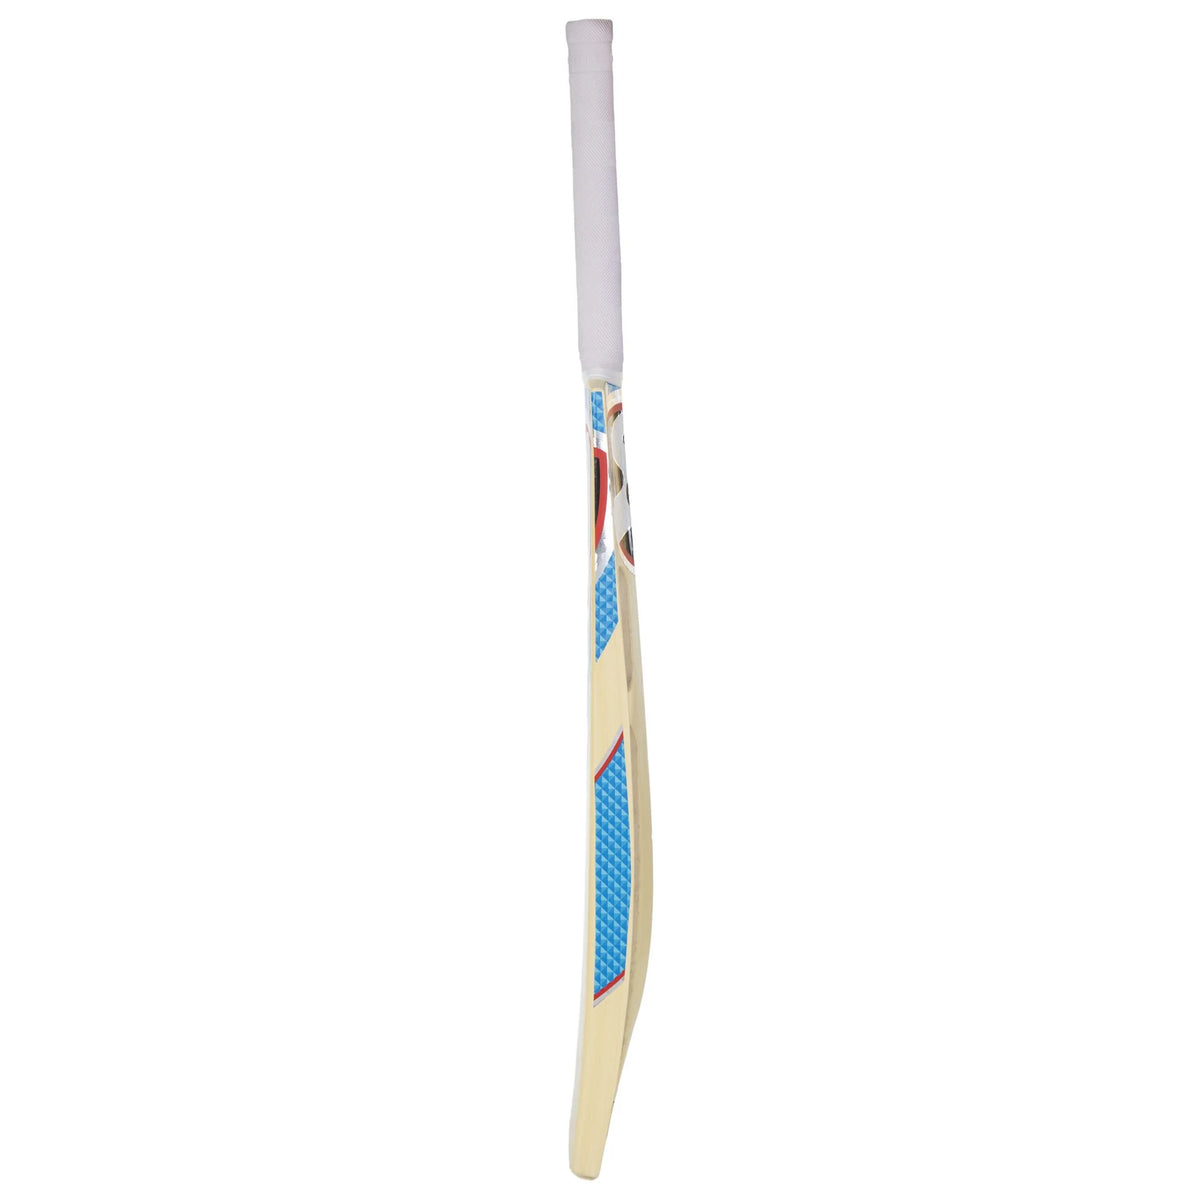 Pre-Order SG Kashmir Willow Cricket Bat (Tennis ball) T-800